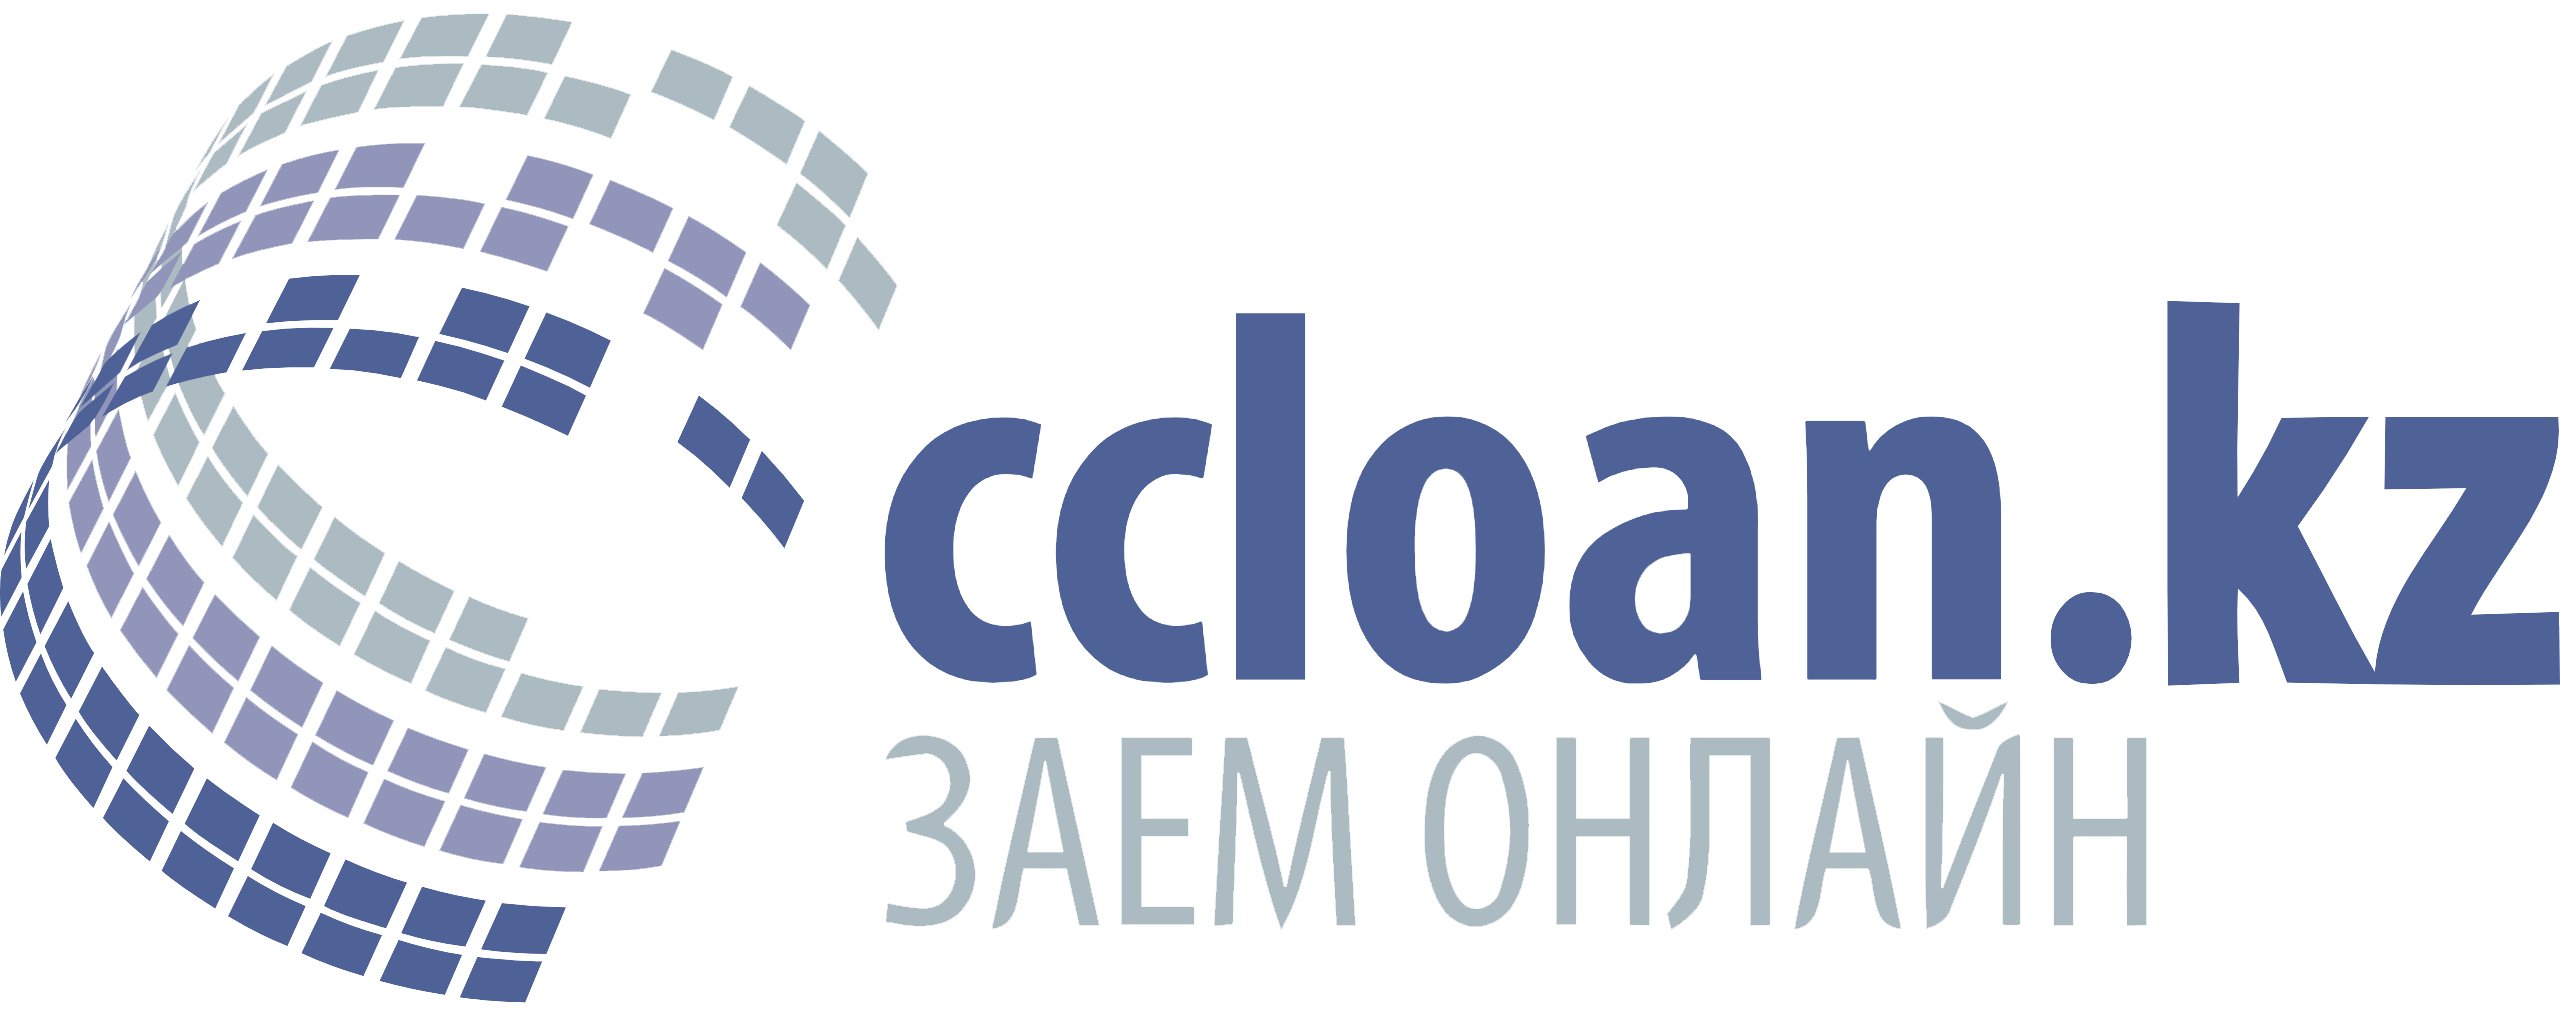 Логотип МФО Ccloan